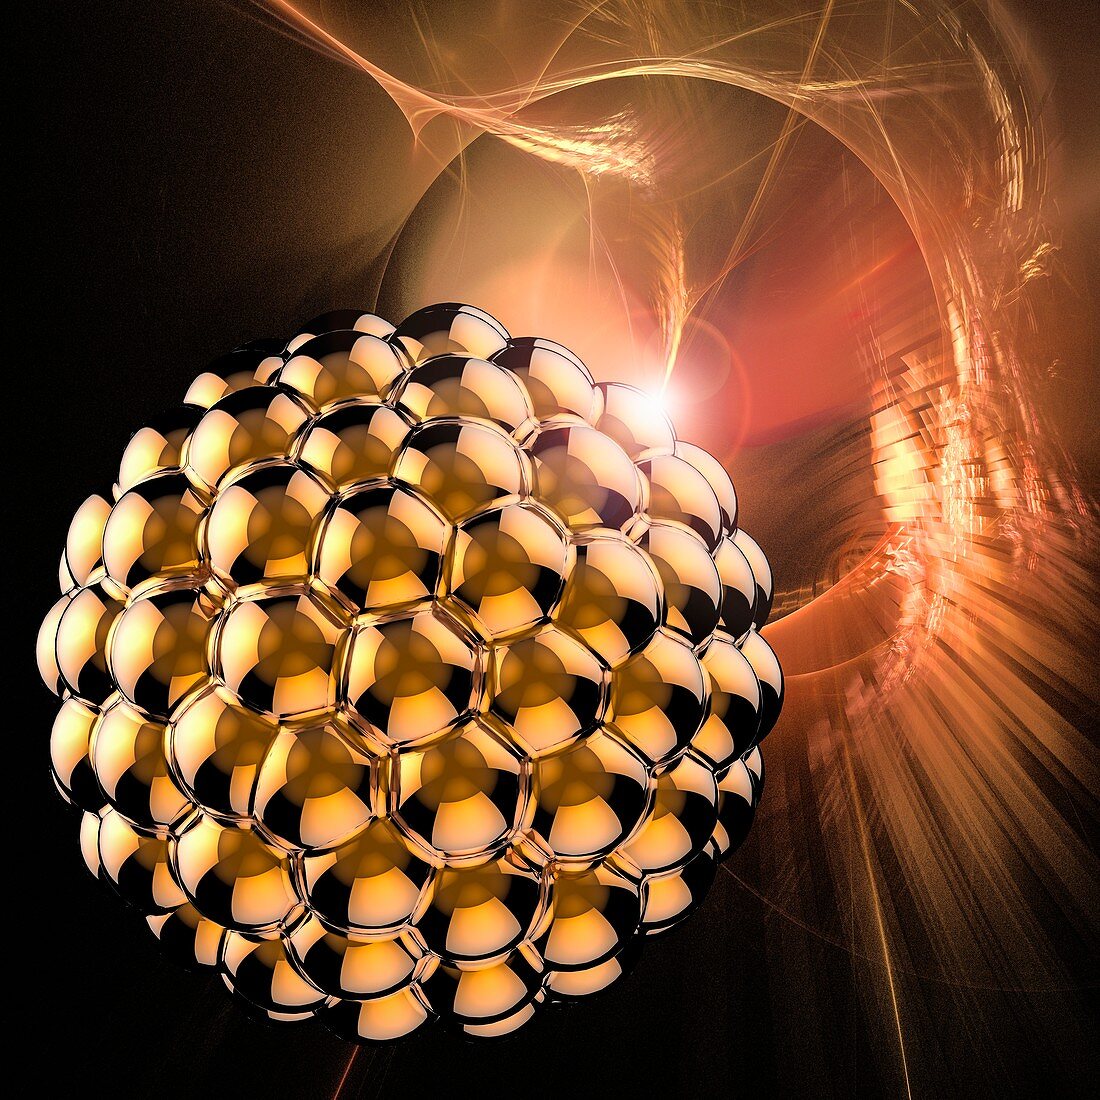 Nanoparticle, illustration